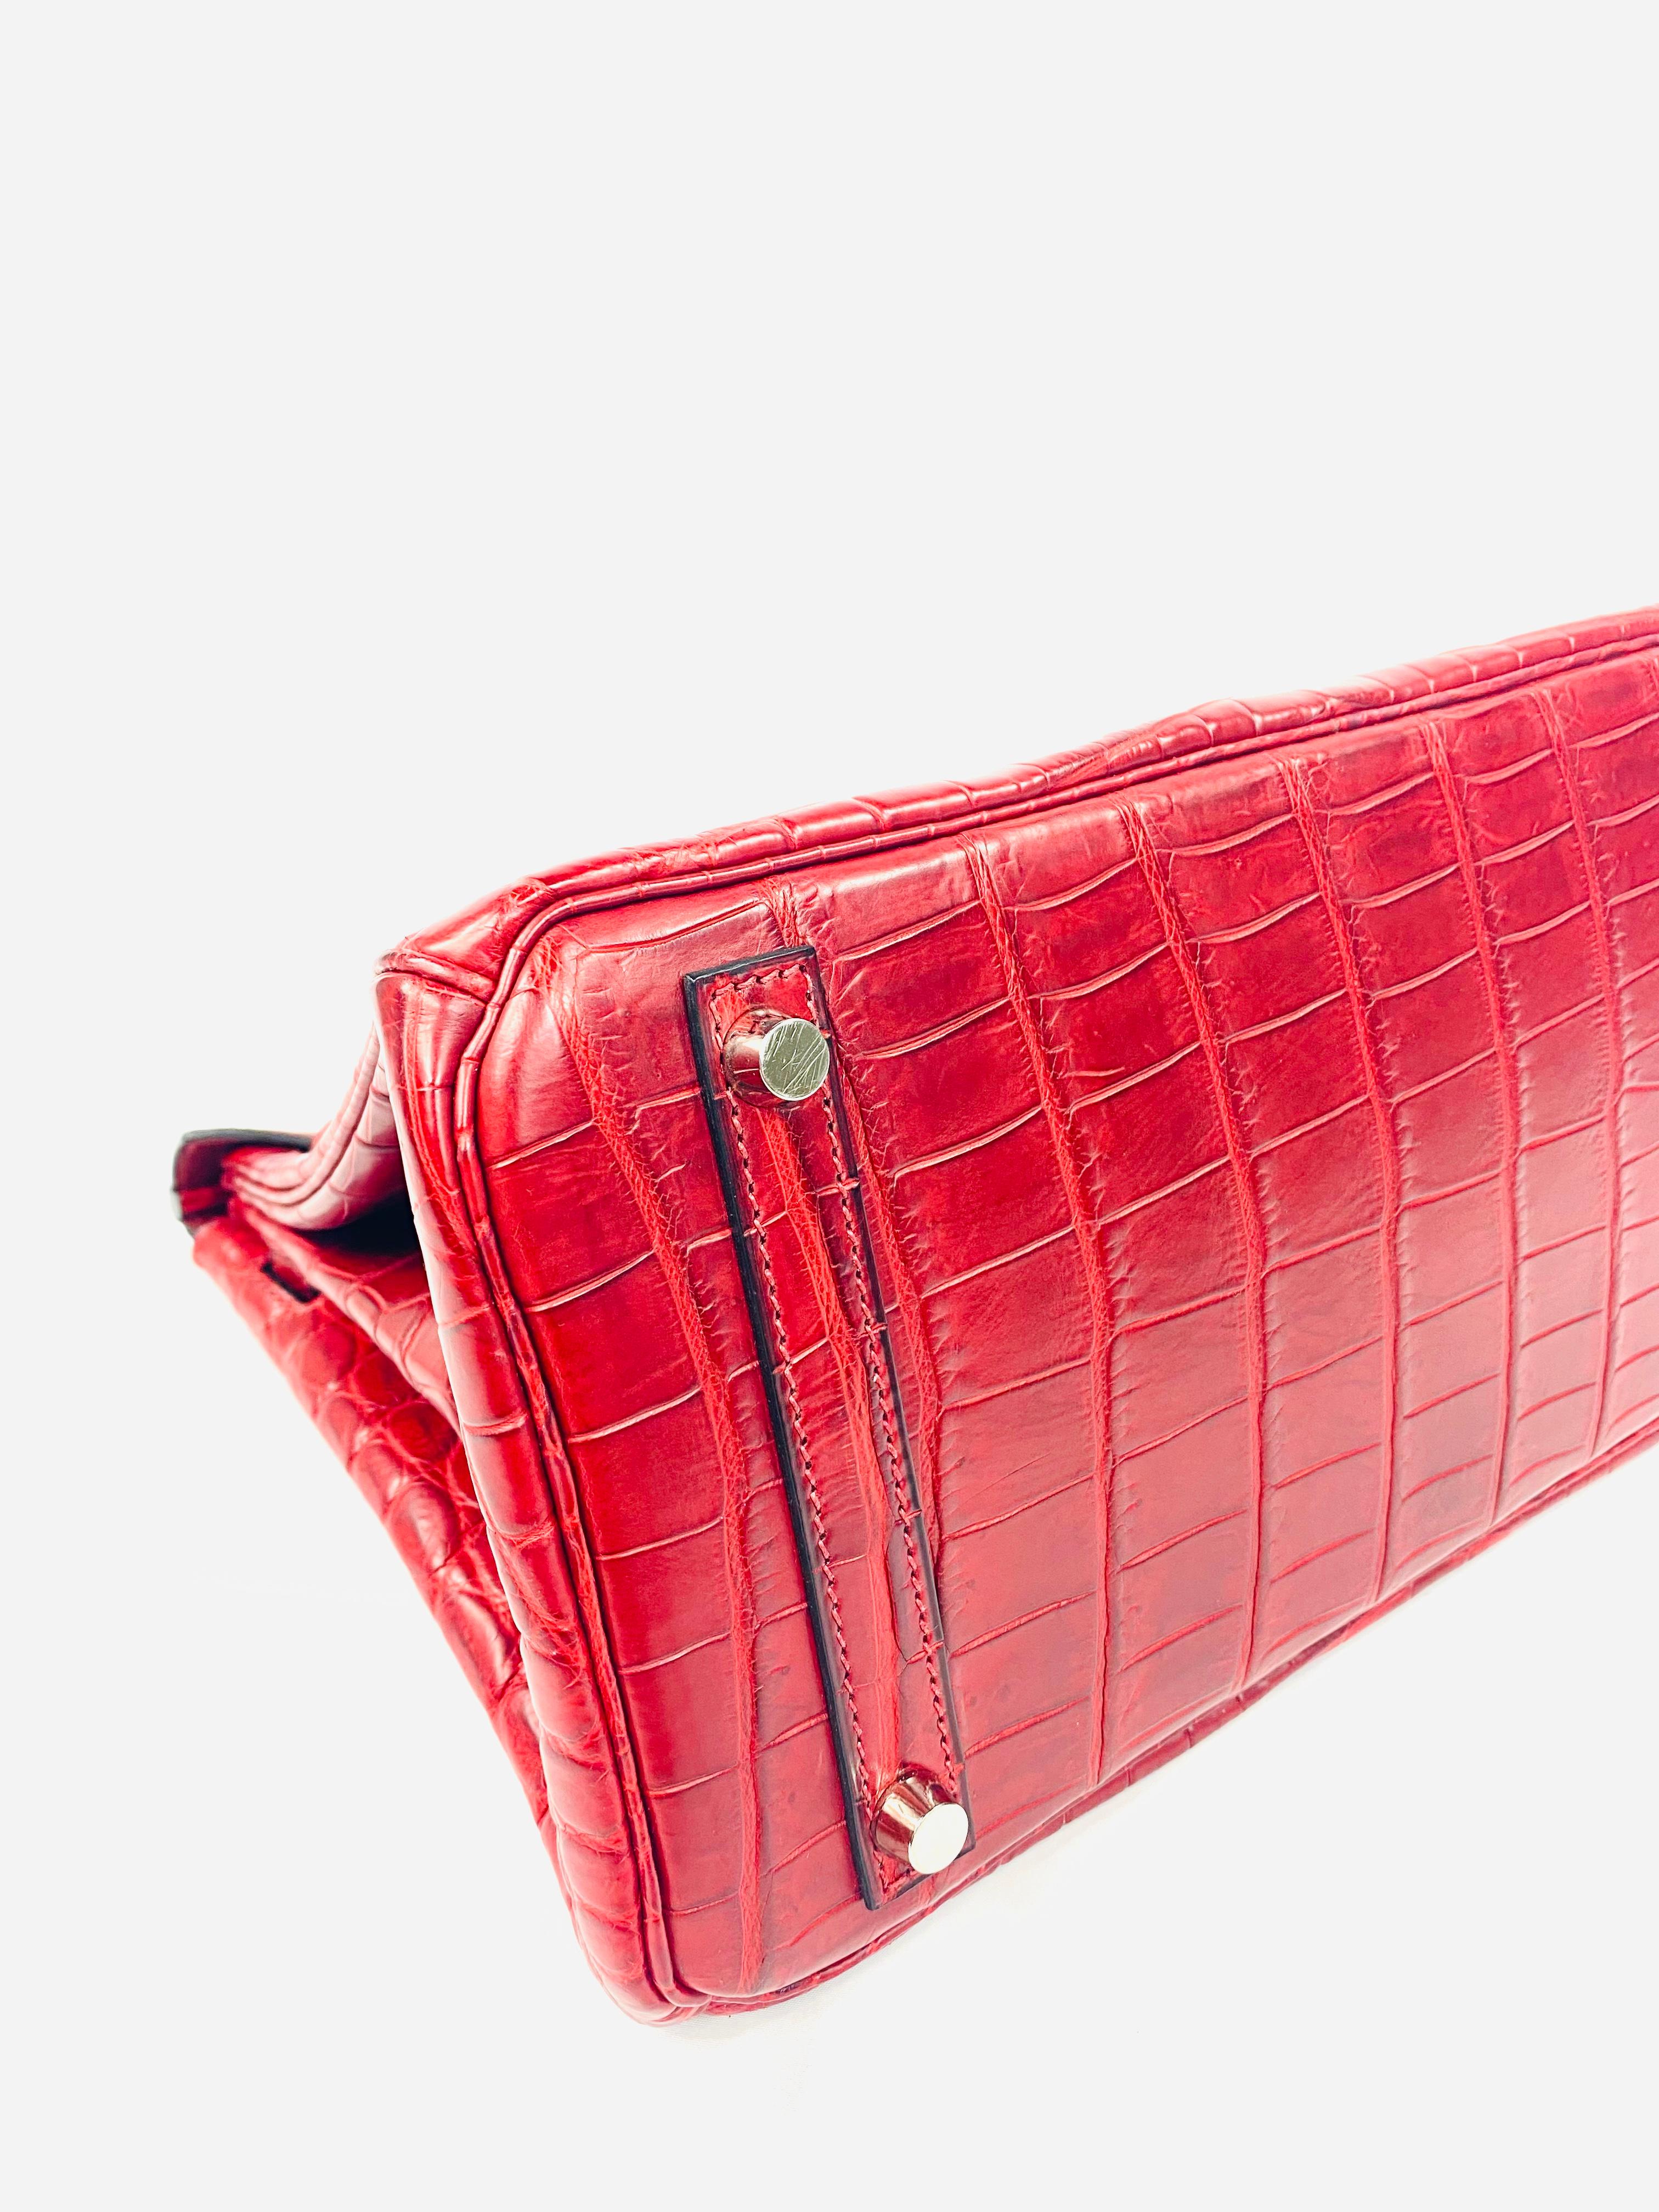 Hermès Niloticus Red Crocodile Leather Birkin 30 Handbag 3